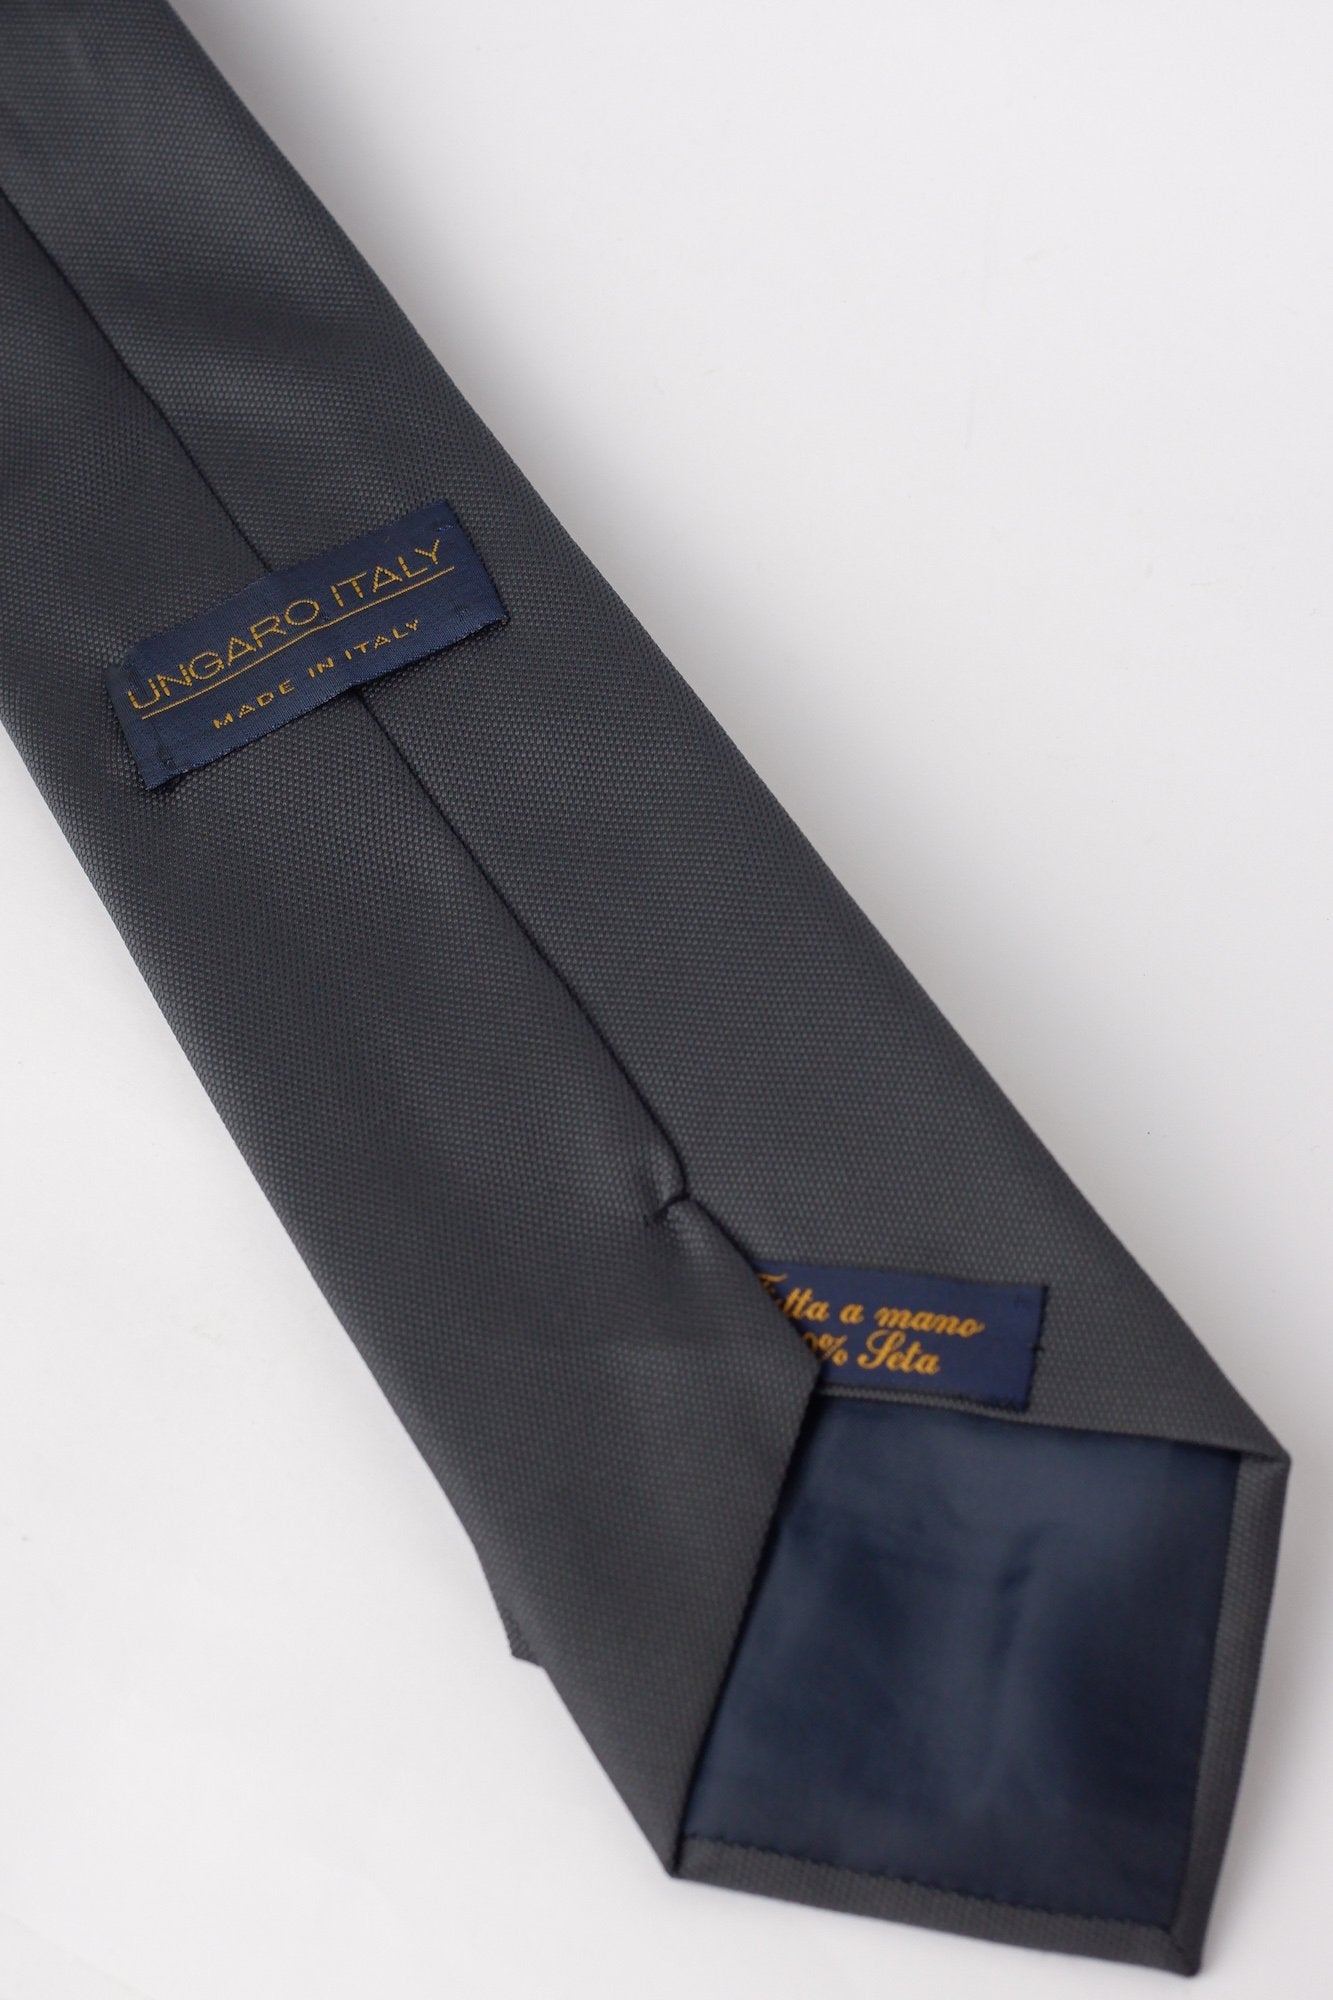 Ungaro Black Textured Necktie